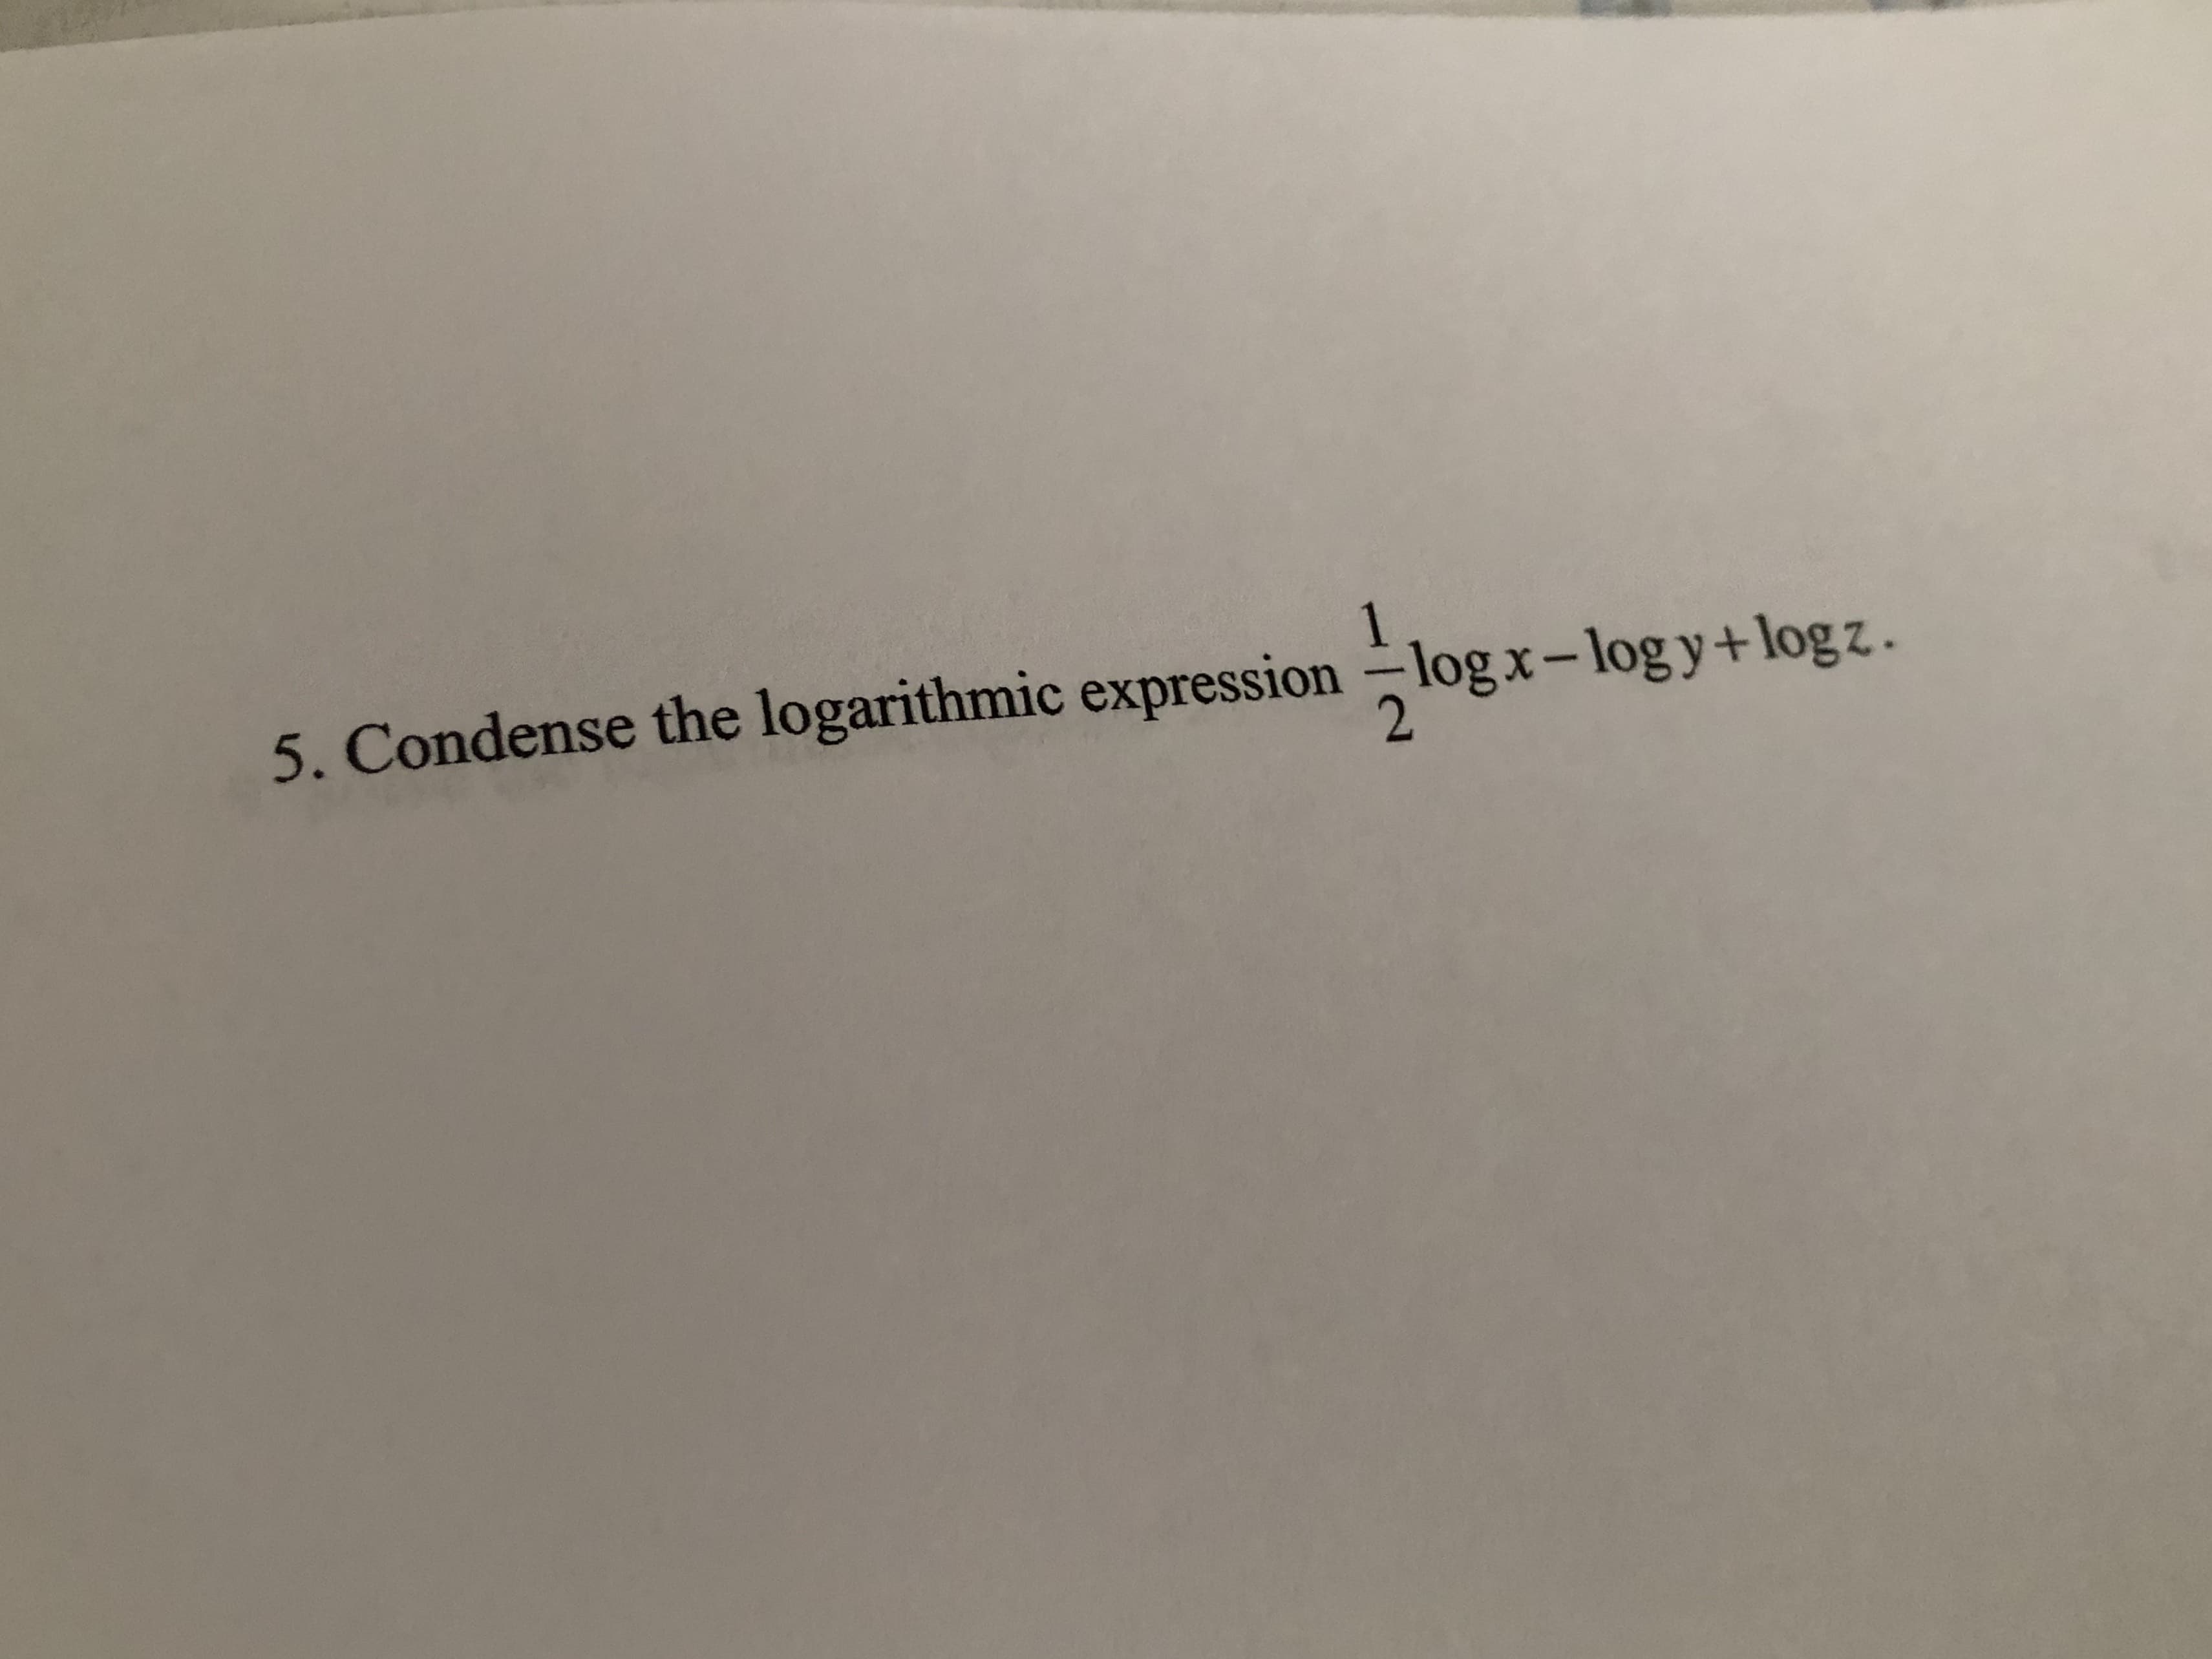 5. Condense the logarithmic expression logx-logy+logz.
